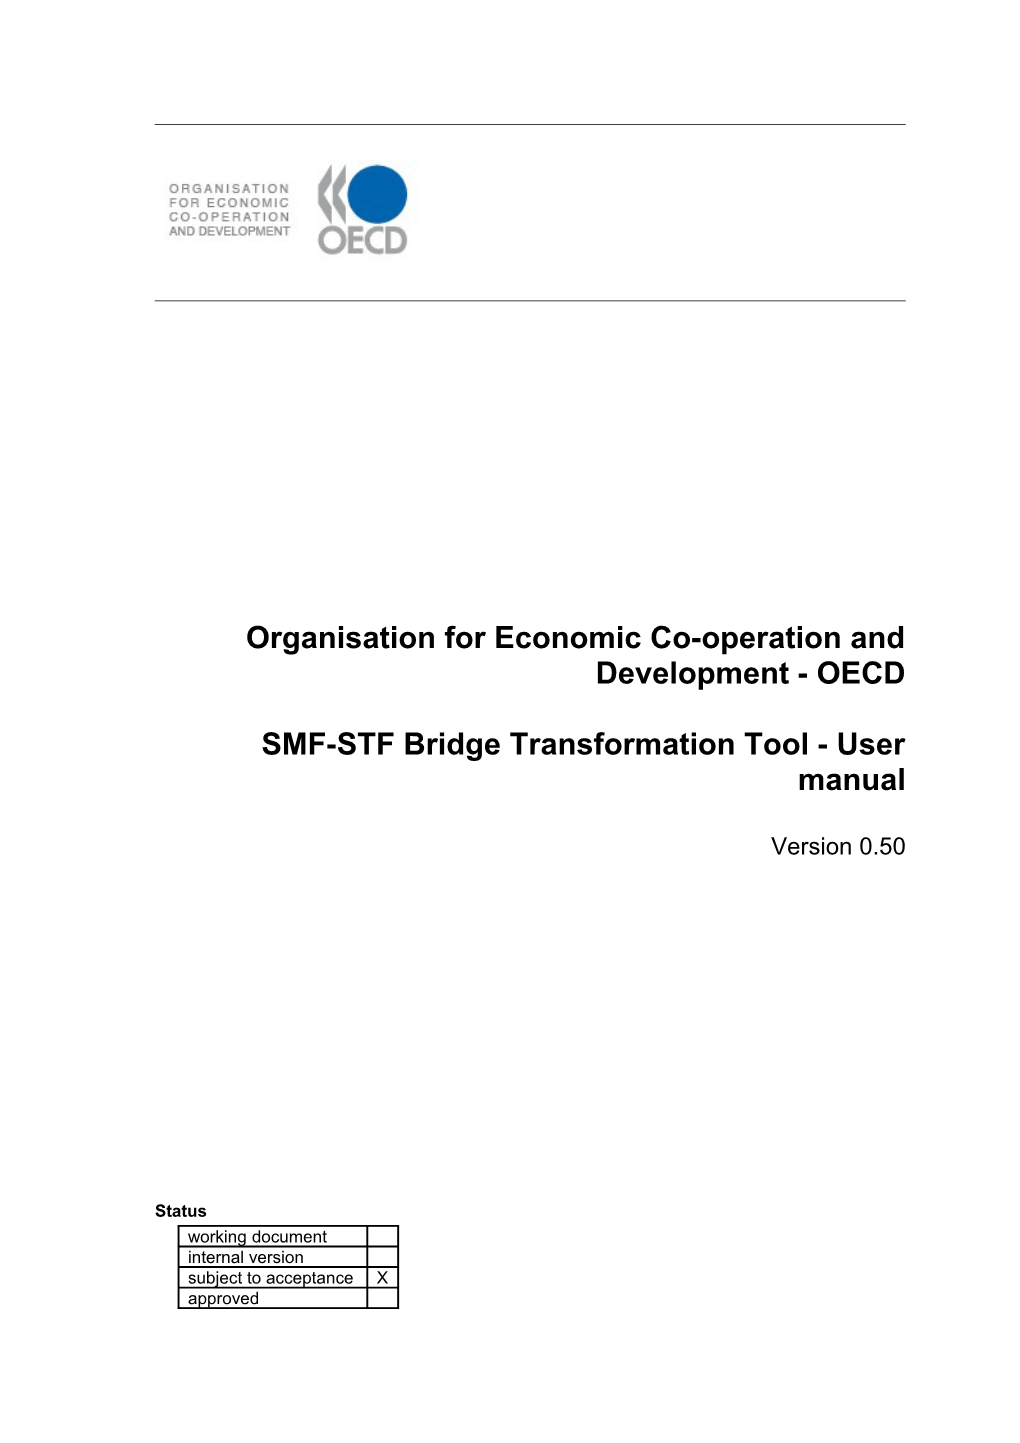 SMF-STF Bridge Transformation Tool - User Manual